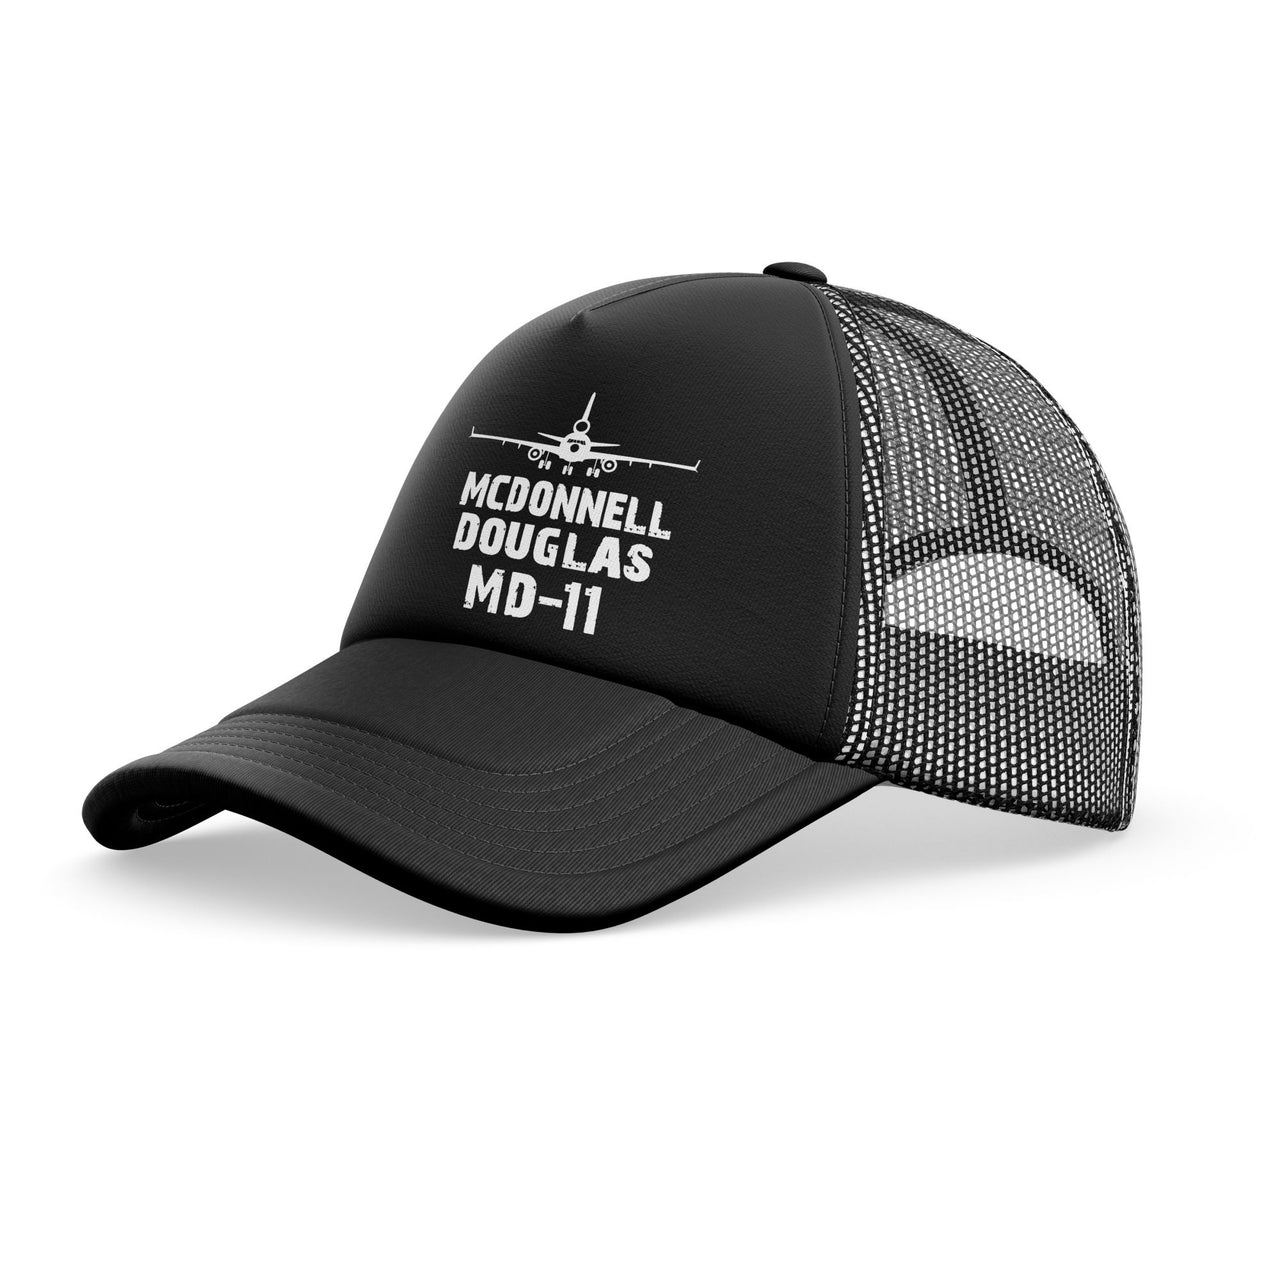 McDonnell Douglas MD-11 & Plane Designed Trucker Caps & Hats